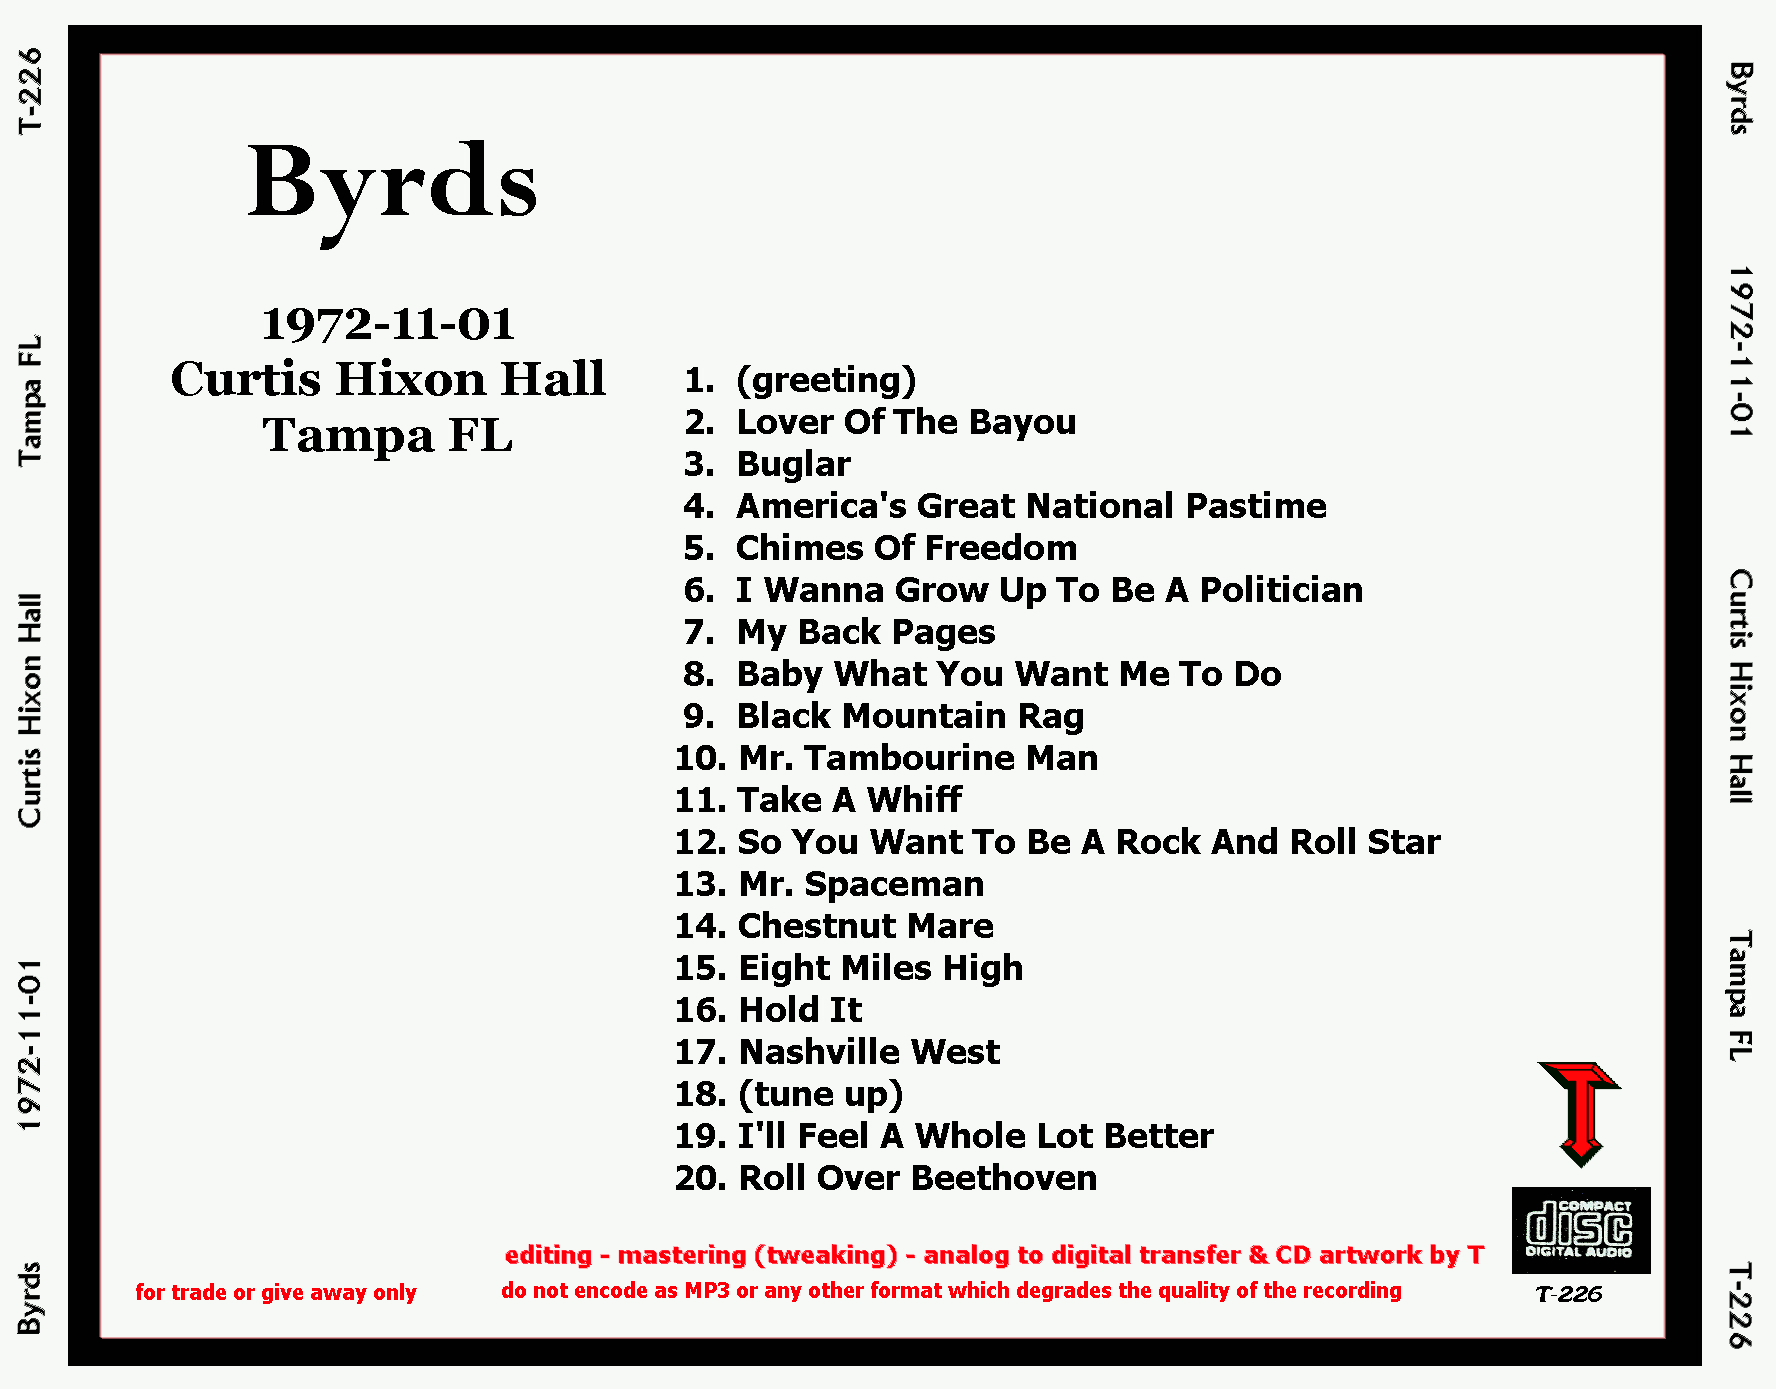 Byrds1972-11-01HixonHallTampaFL (1).JPG